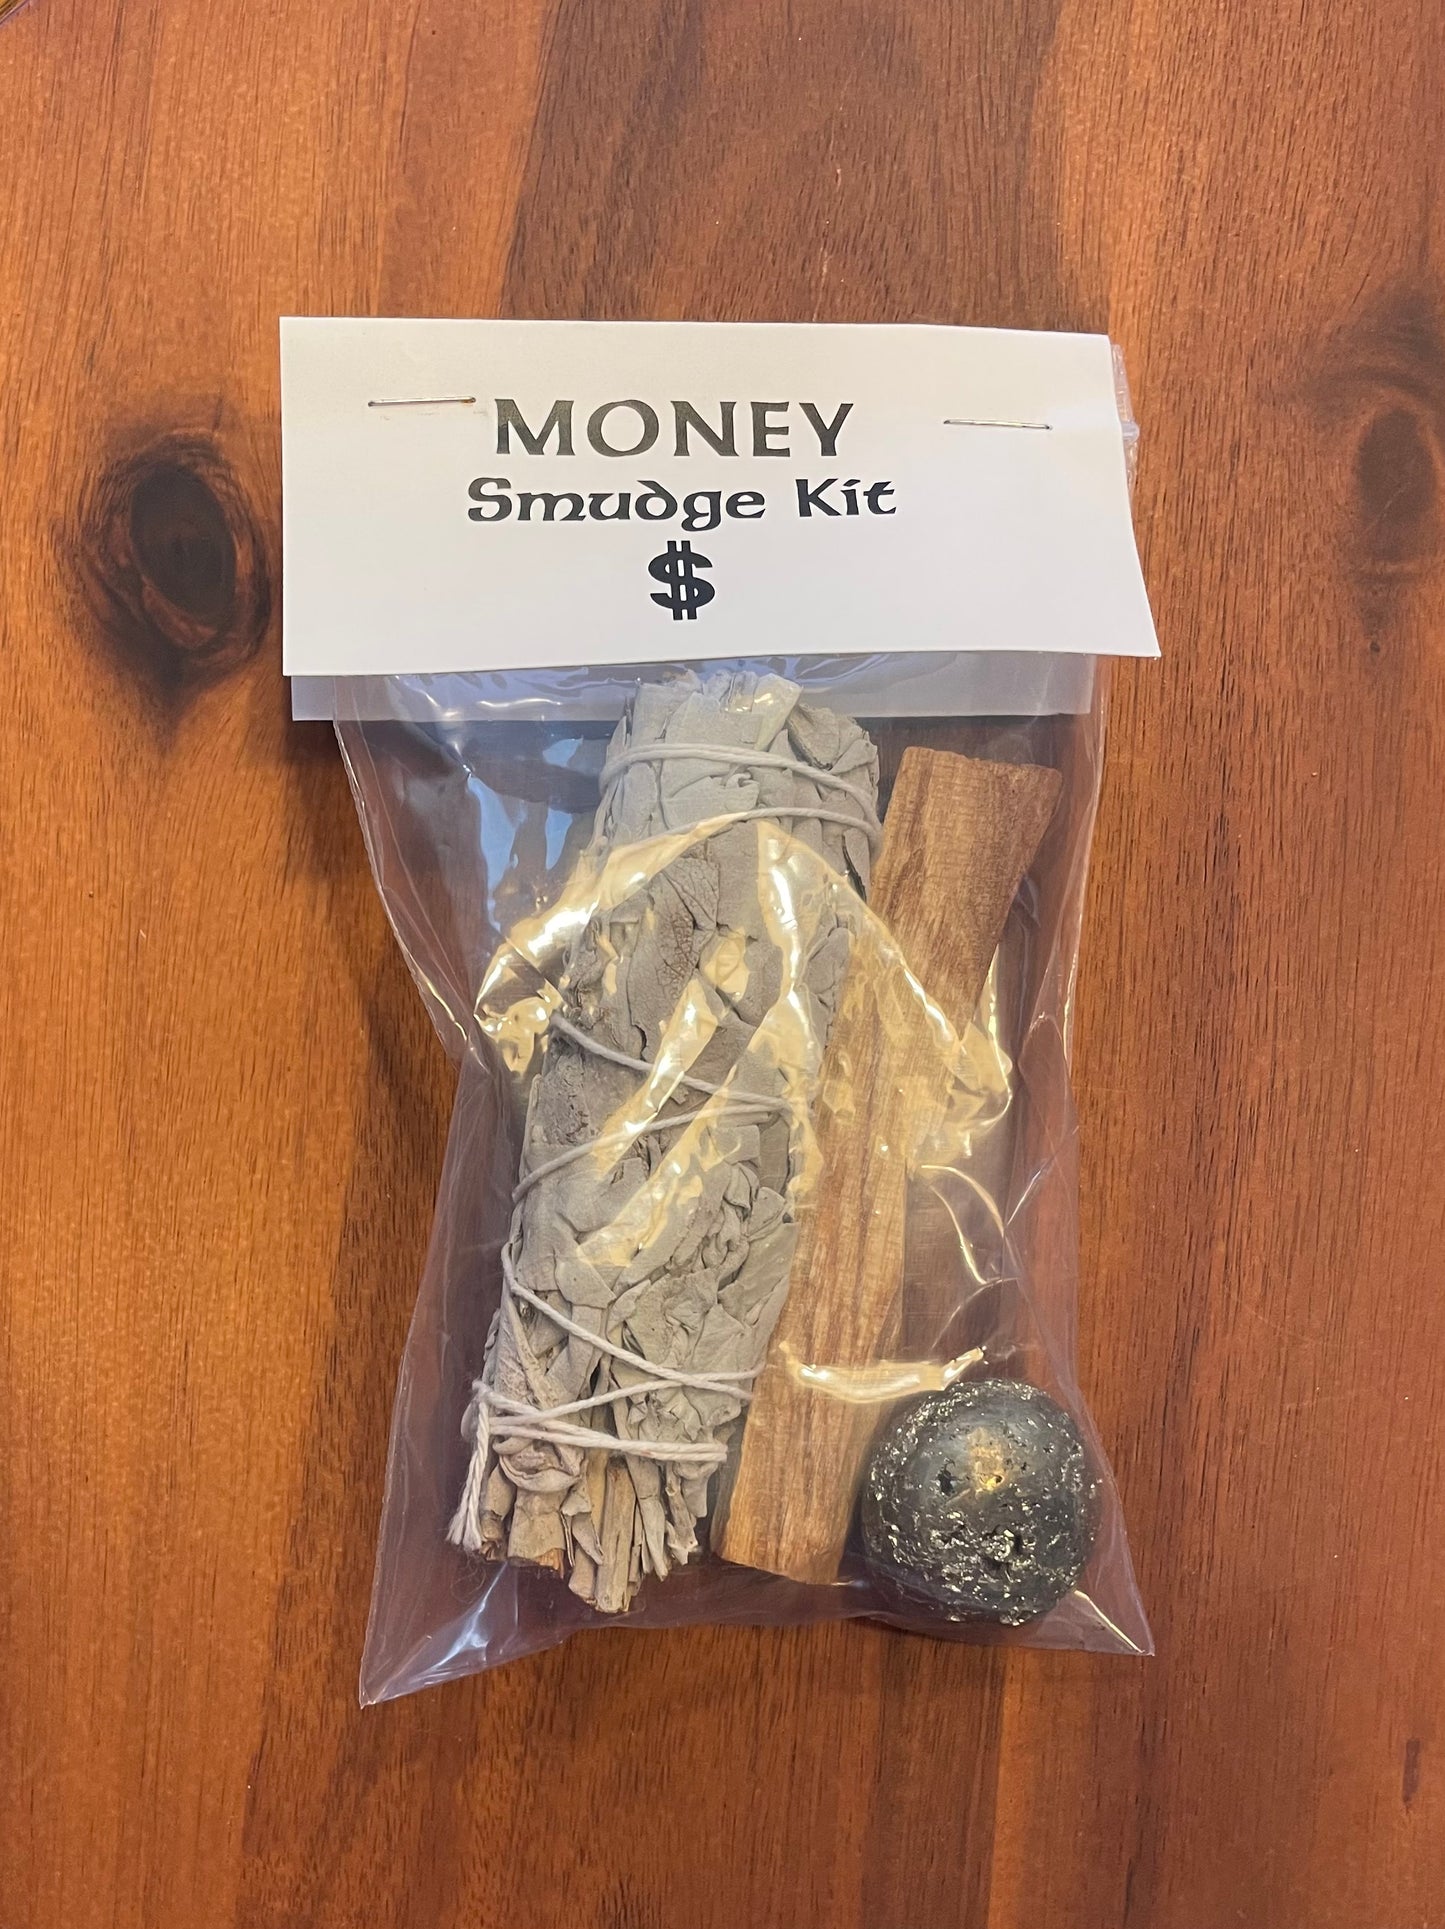 Manifest It smudge kit - MONEY - Three piece set